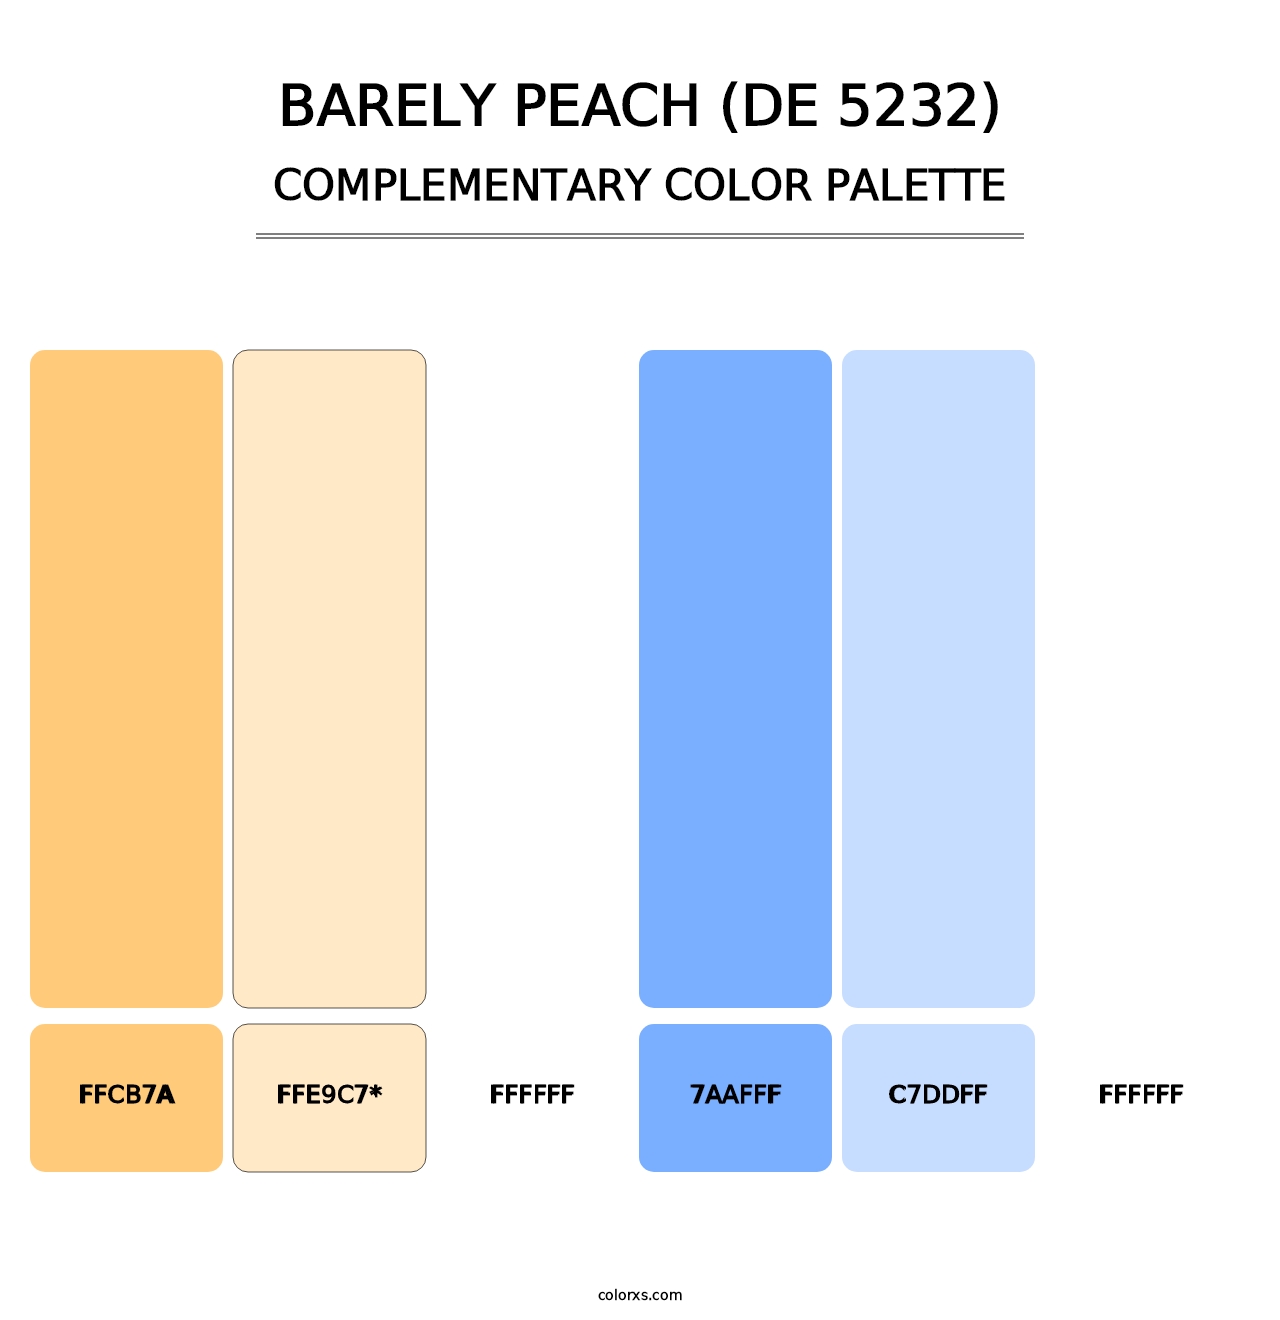 Barely Peach (DE 5232) - Complementary Color Palette